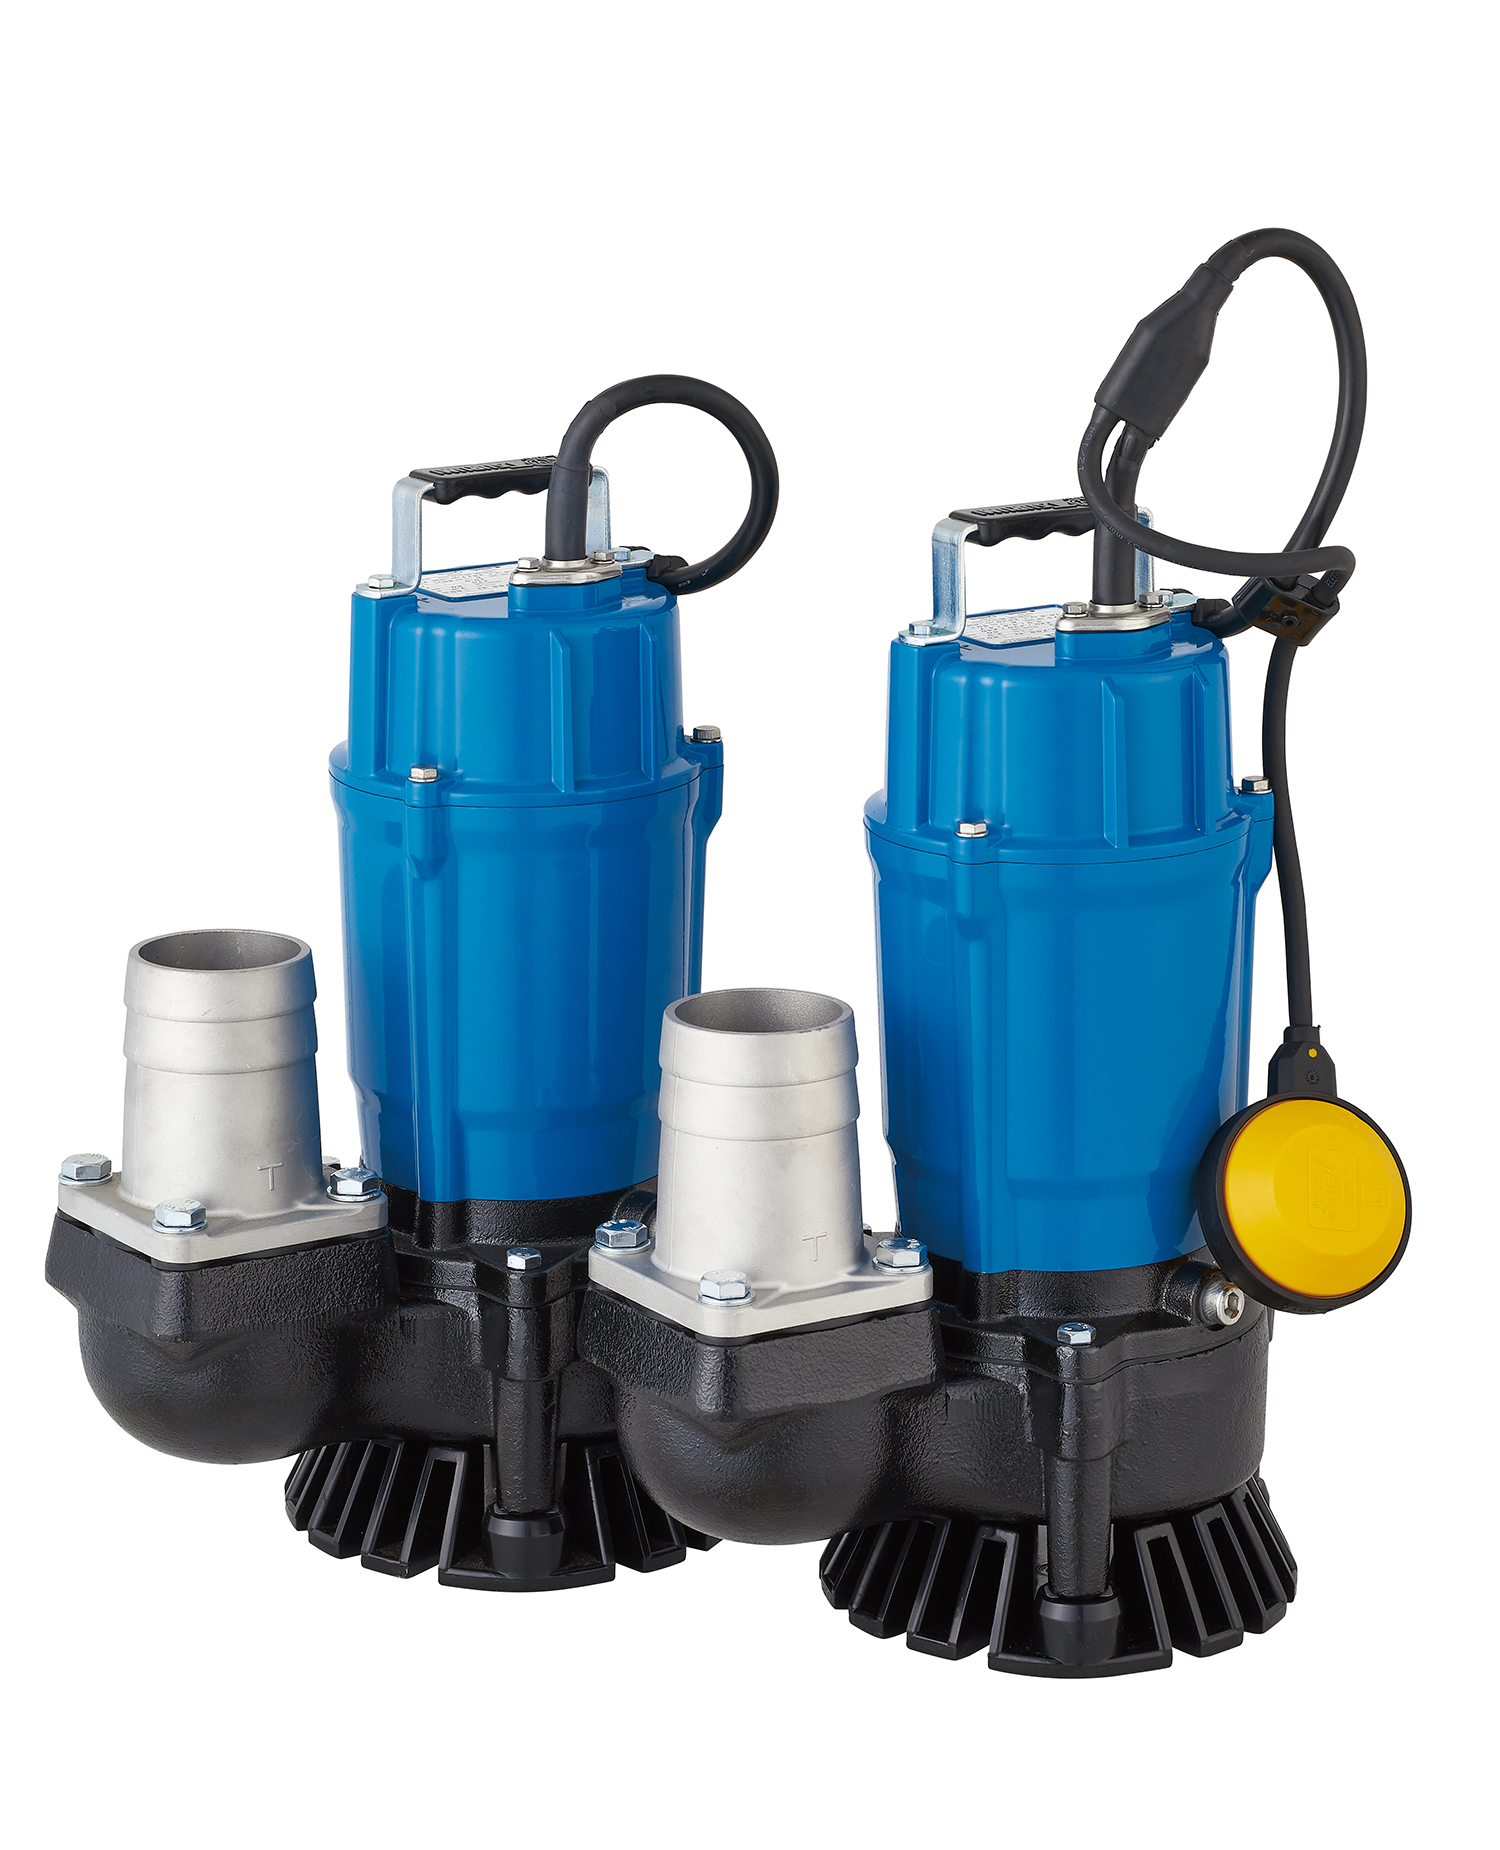 Tsurumi's new portable drainage pumps have a maximum capacity of 580 l/min and maximum head of 10.8 m3/min of drainage capability.